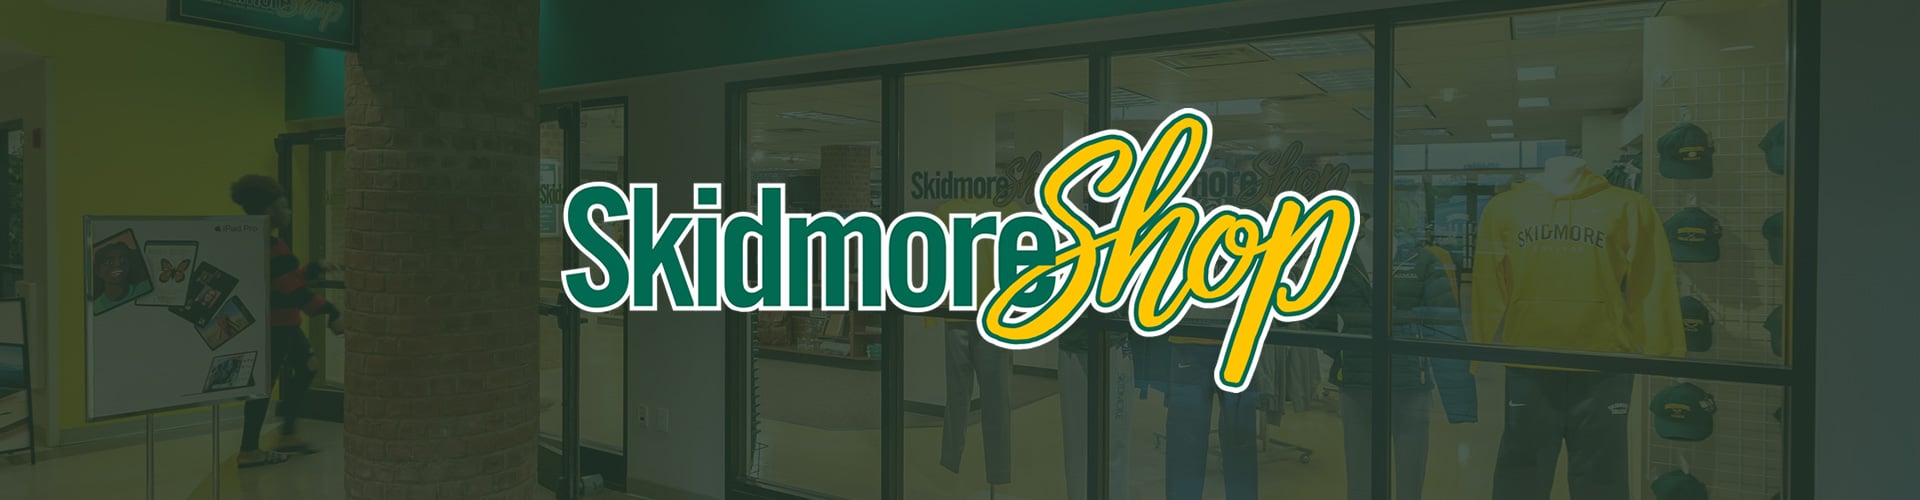 The Skidmore Shop